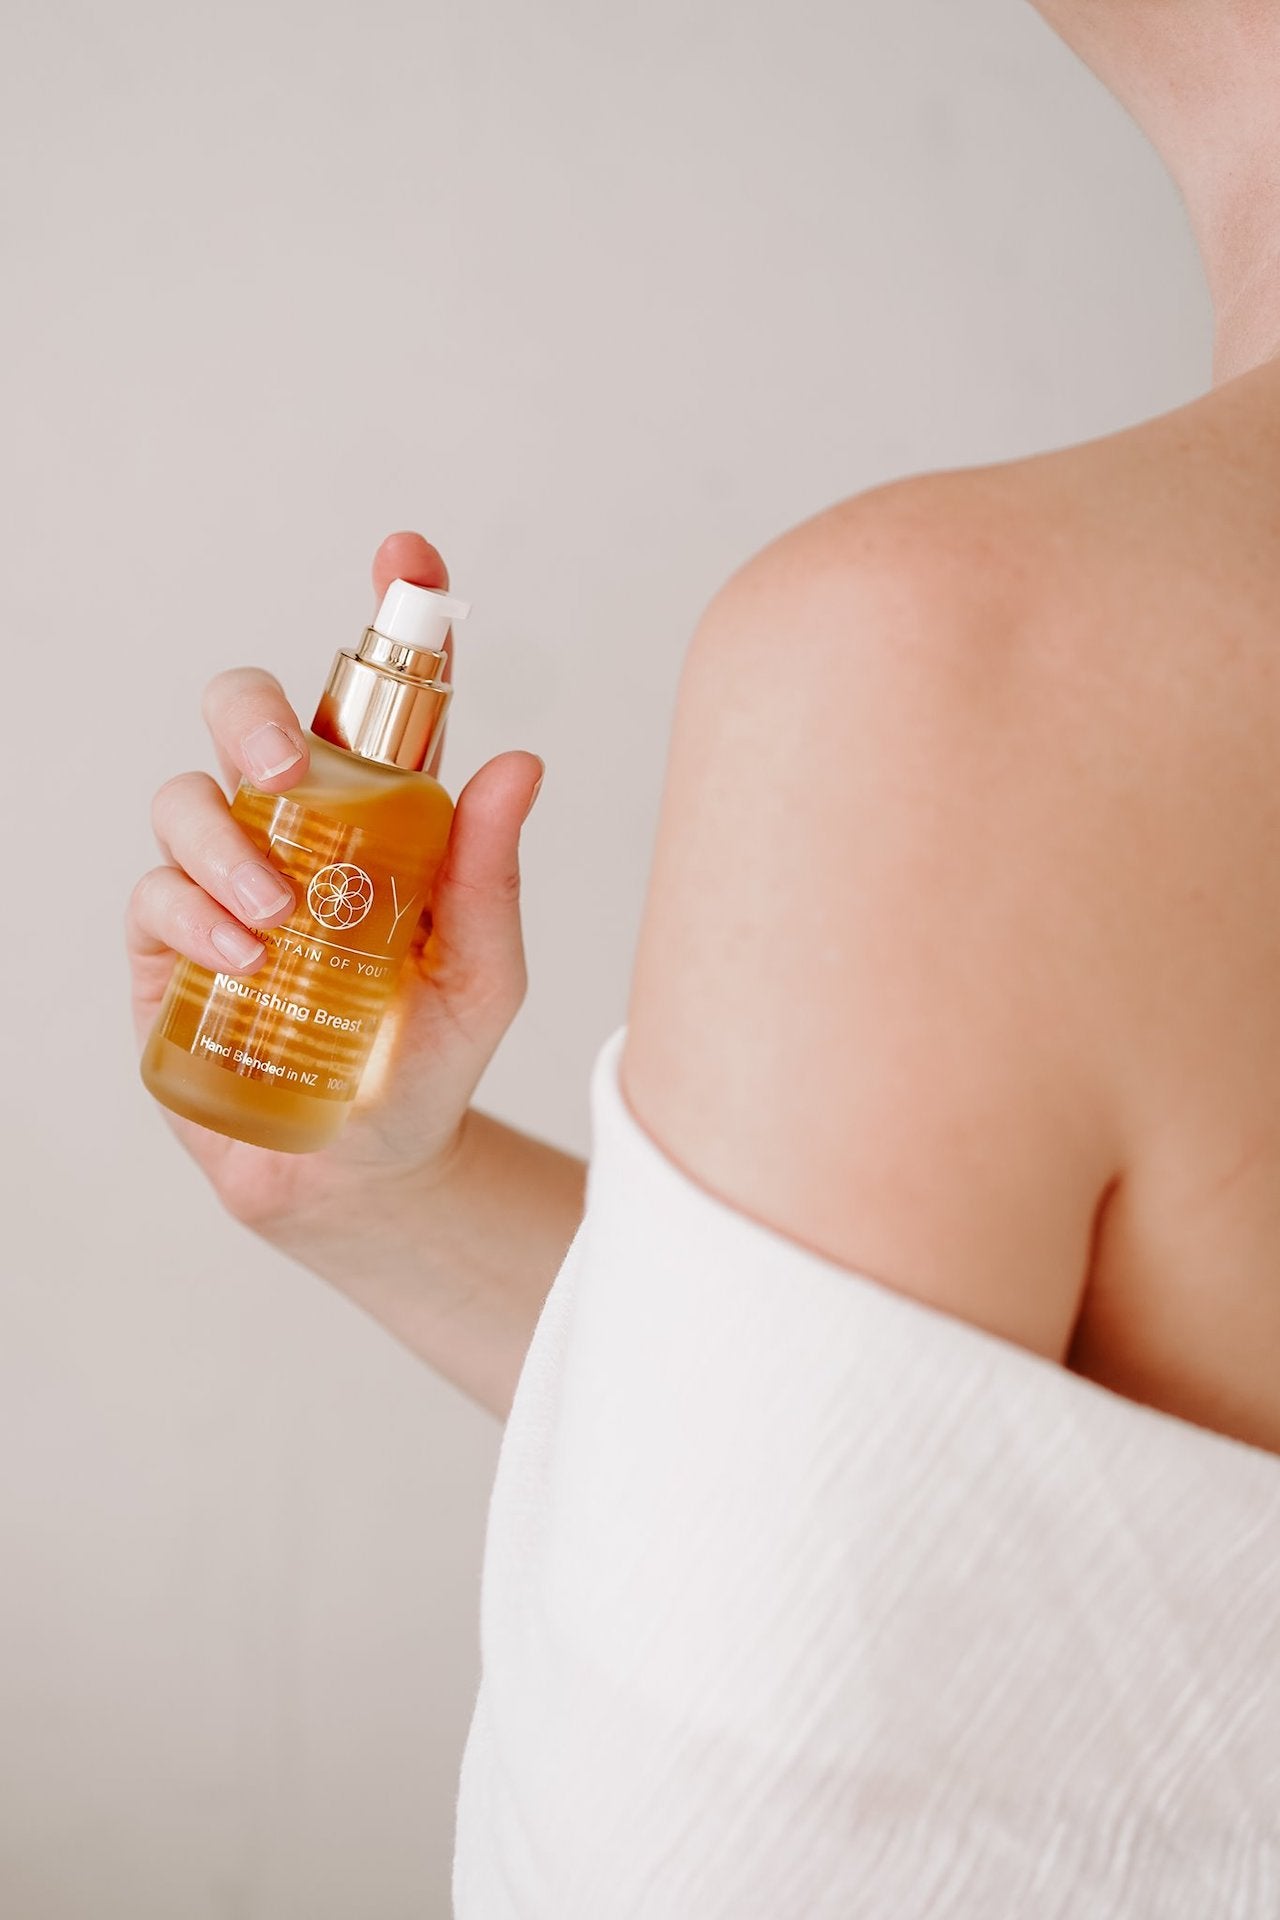 Nourishing Breast Massage Oil